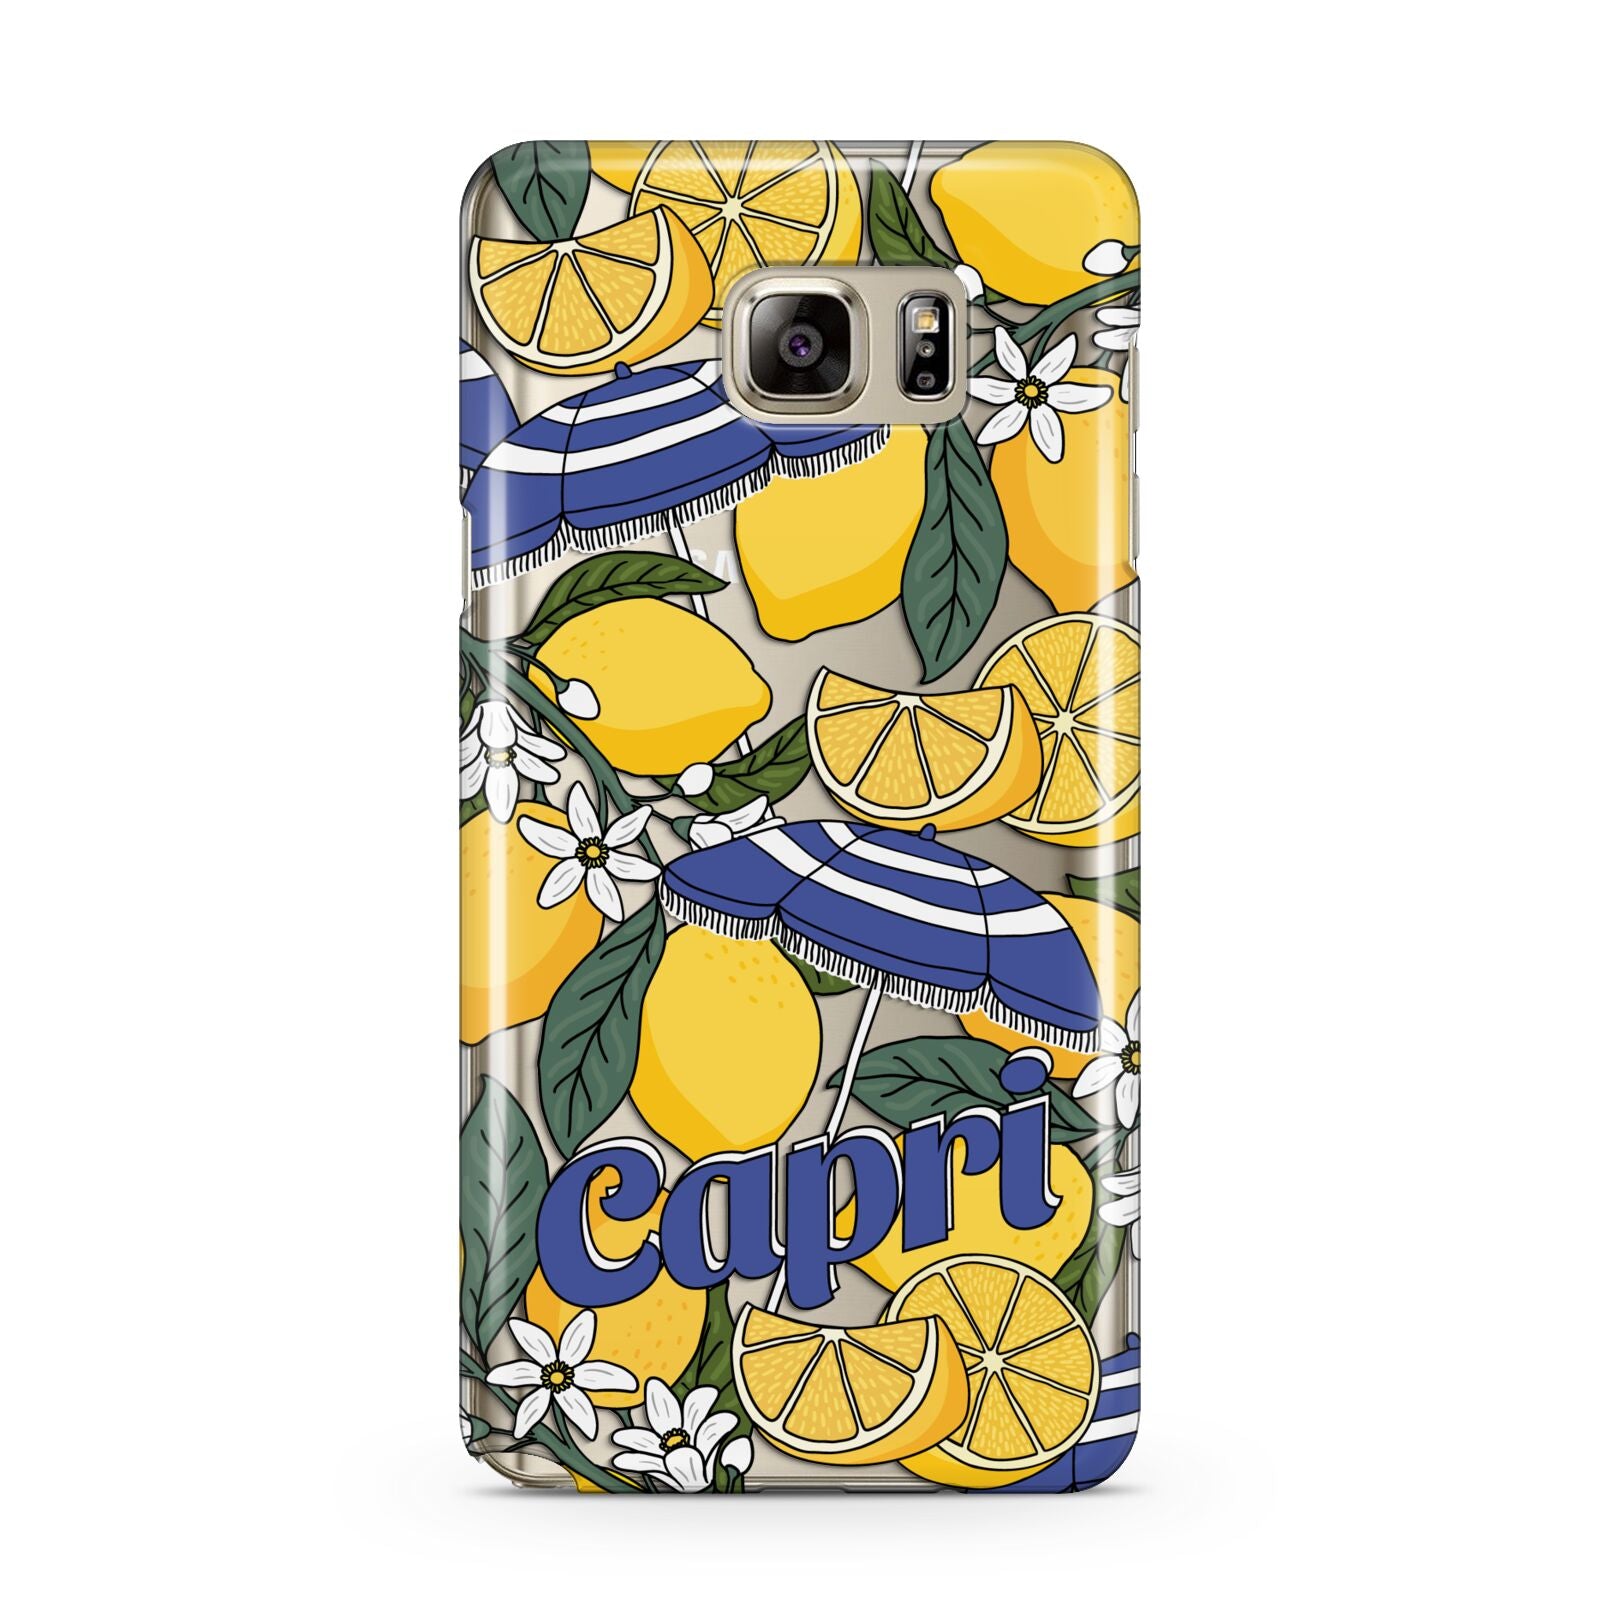 Capri Samsung Galaxy Note 5 Case